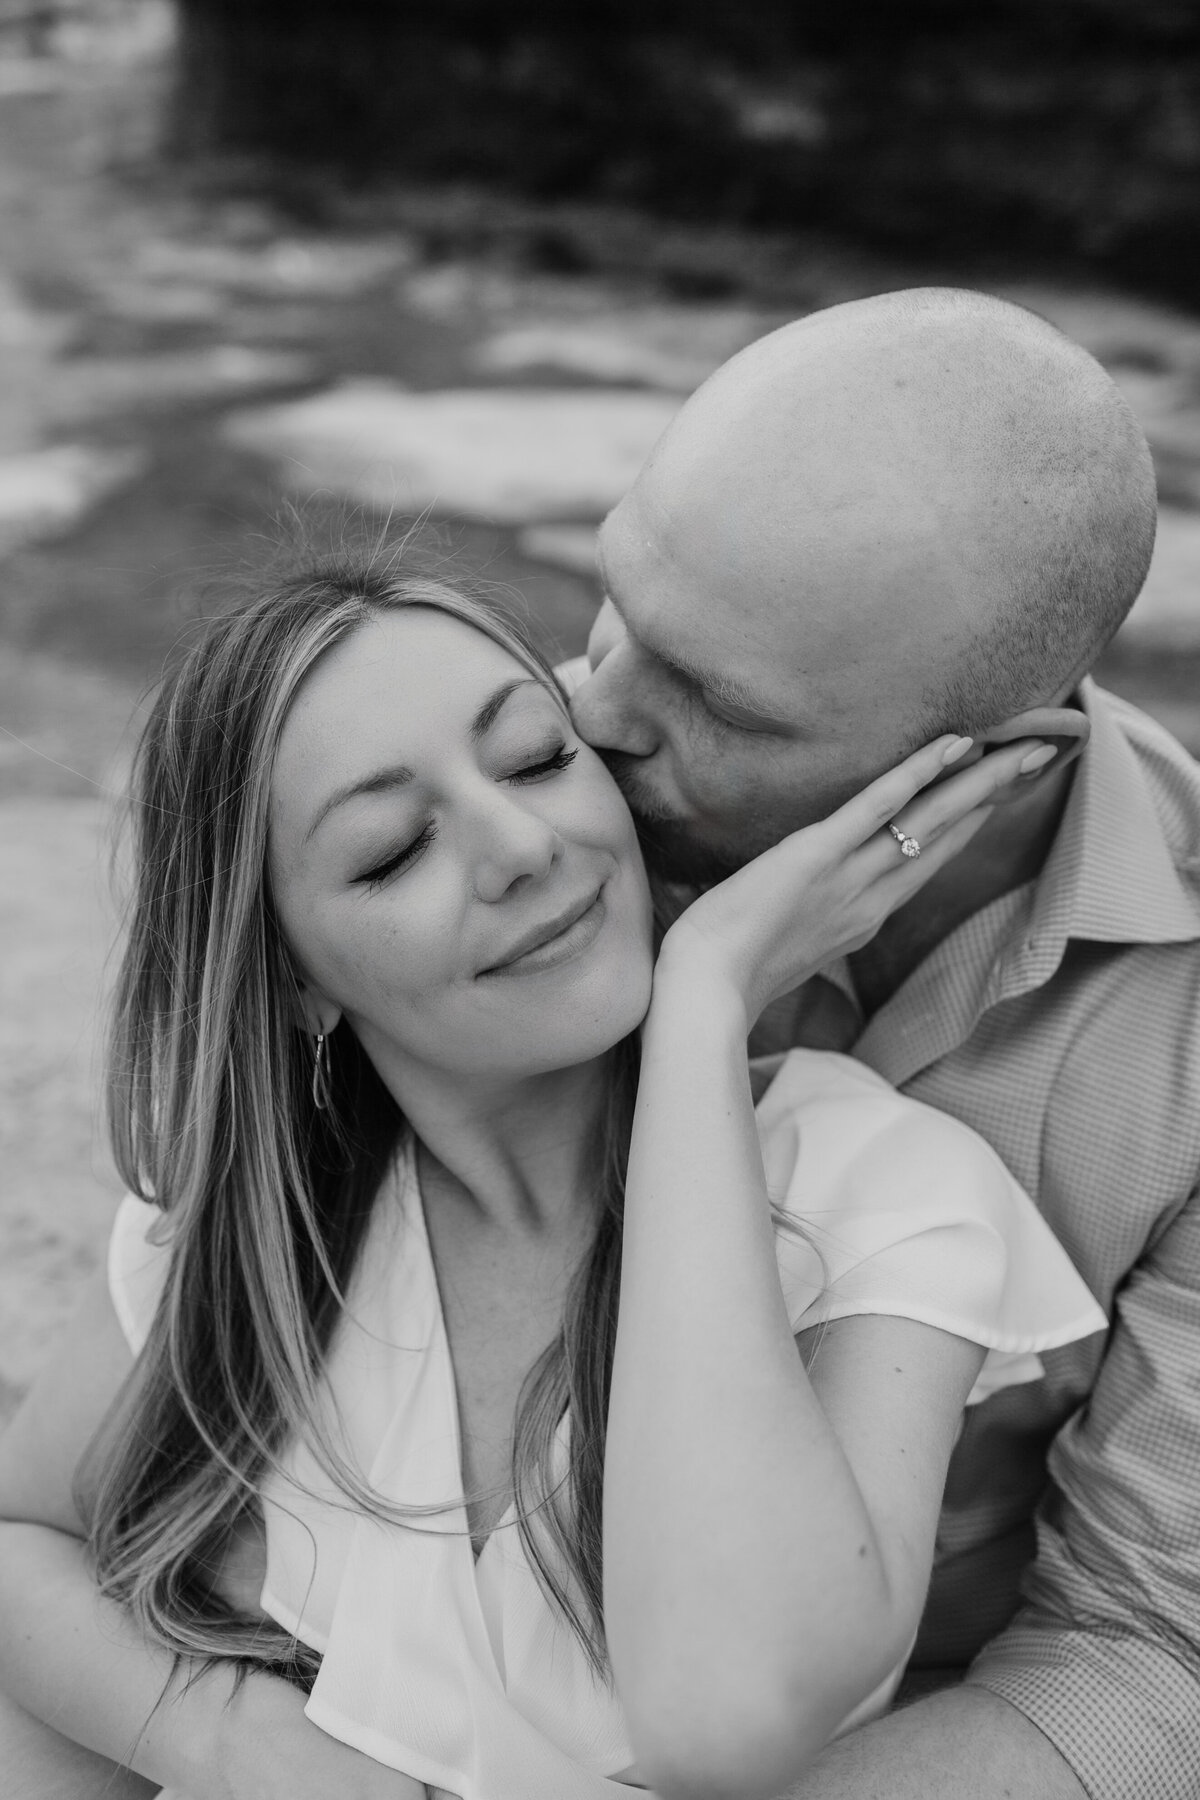 Wedding Photographer serving Fort Worth | Dallas | DFW | Texas - Megan Christine Studio